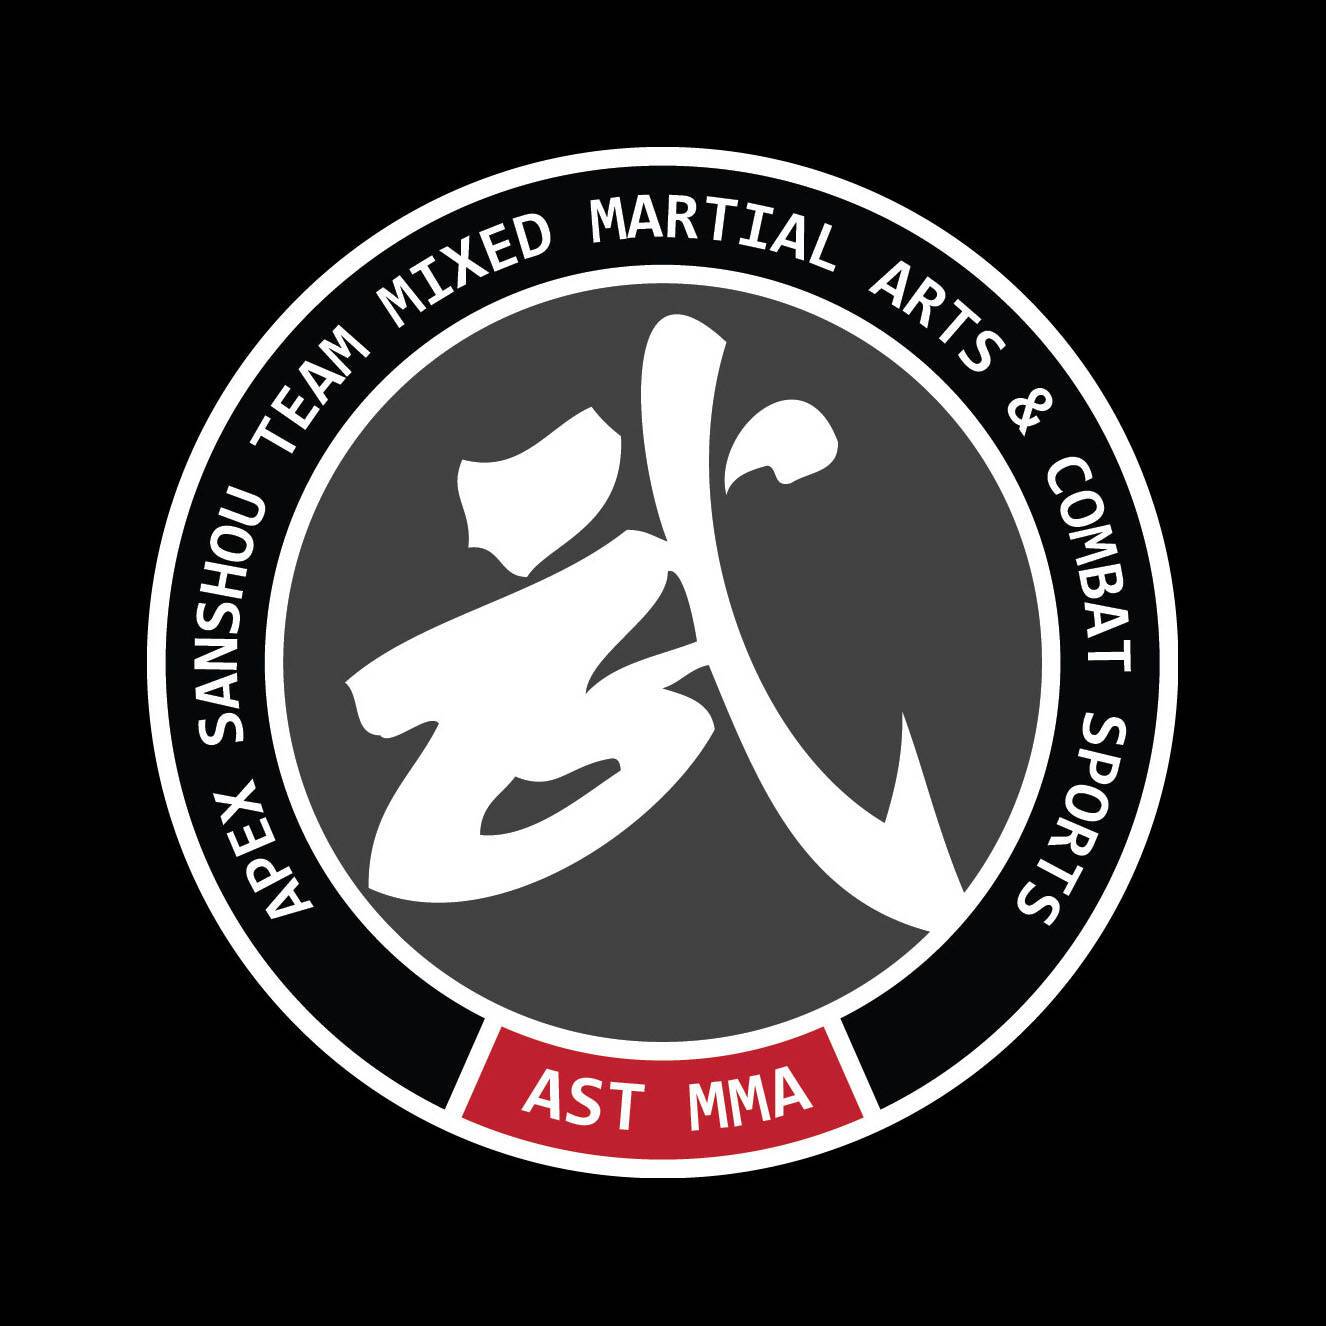 AST-MMA, Martial Arts and Combat Sports